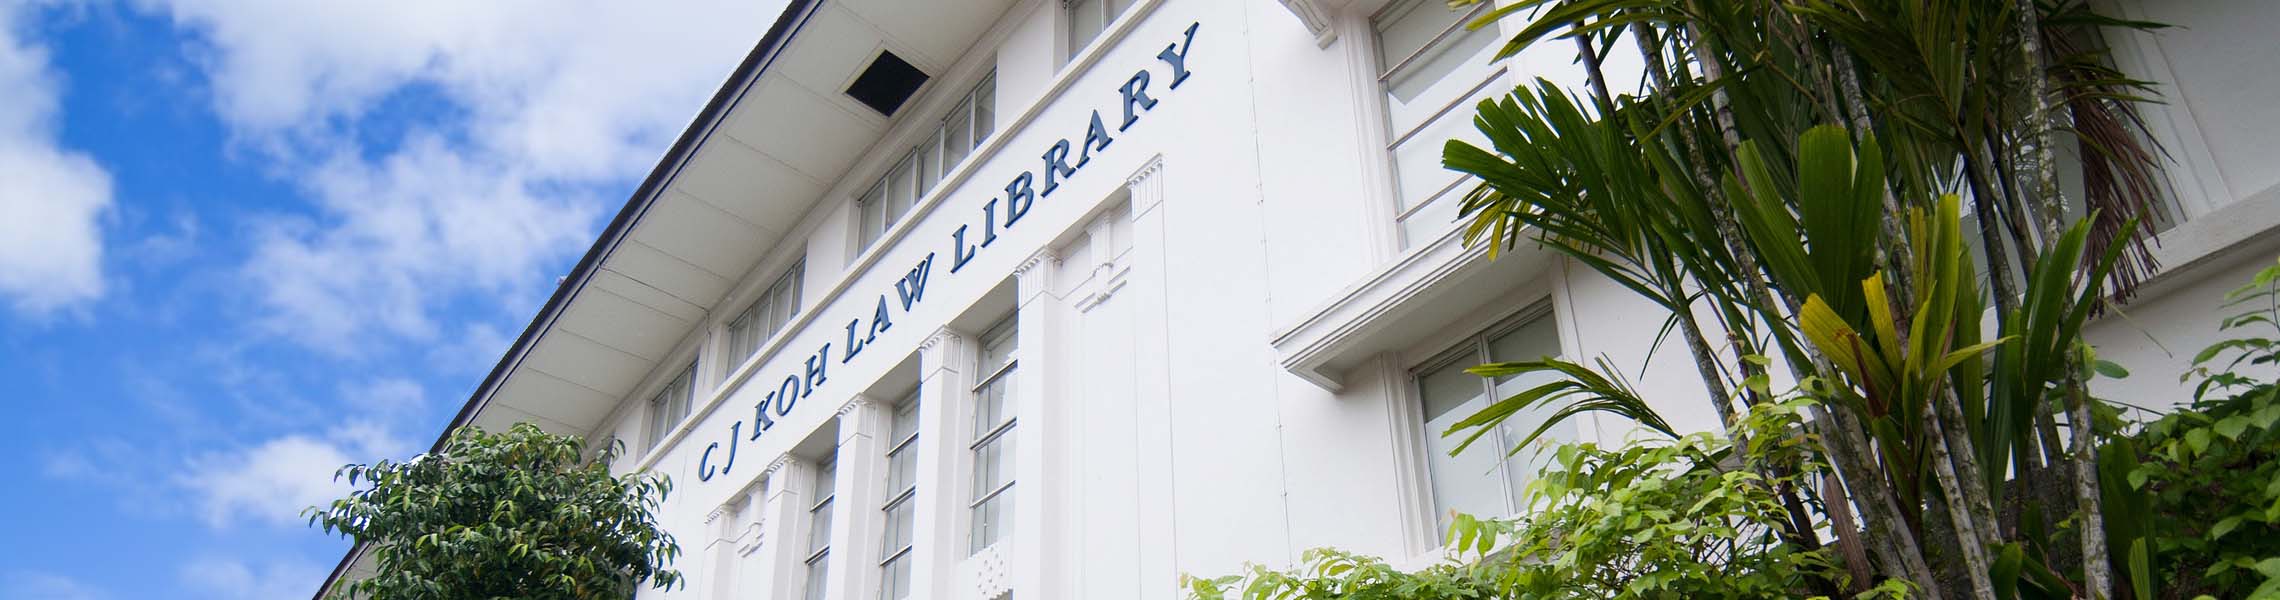 C J Koh Law Library Image